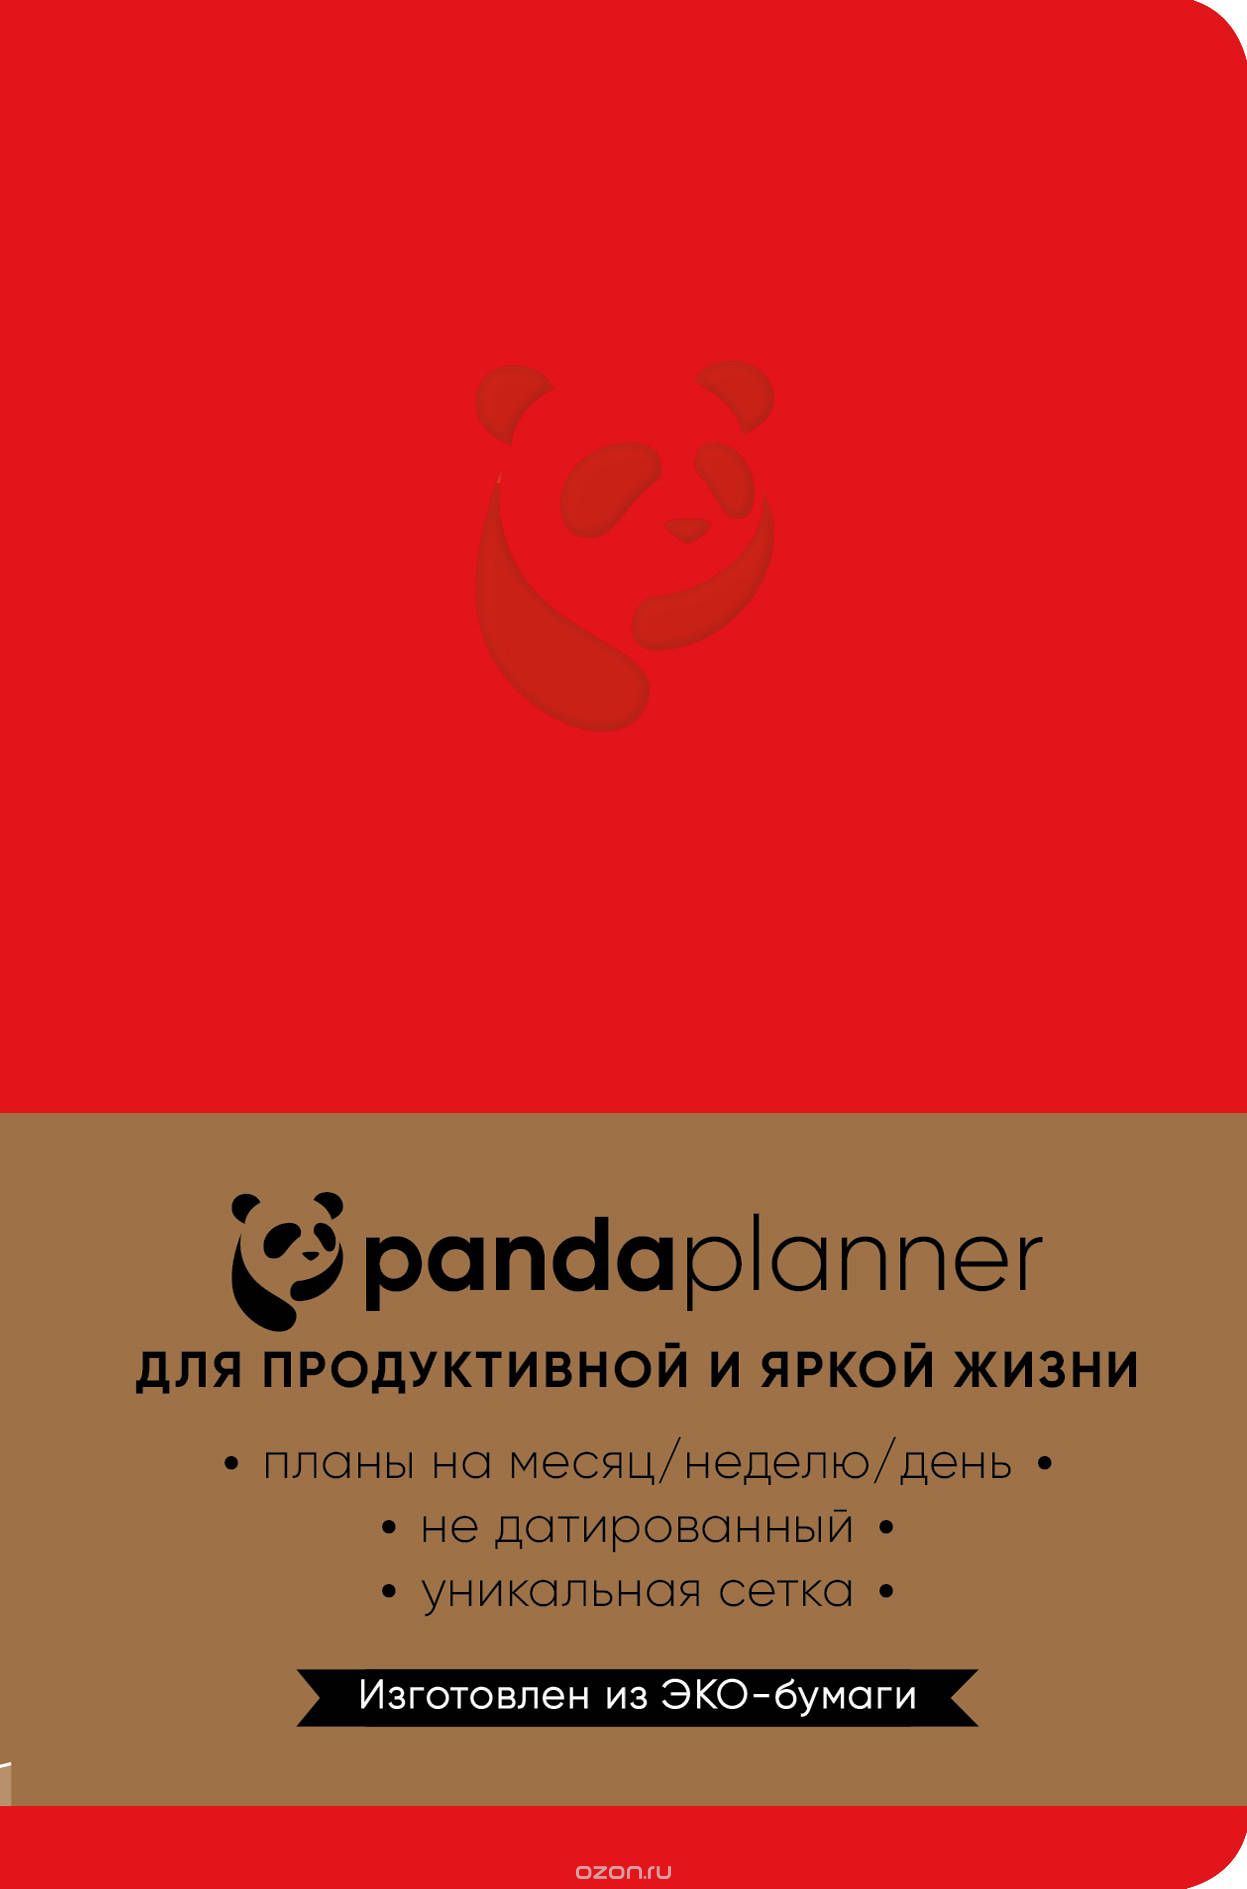 Panda planner,  ()